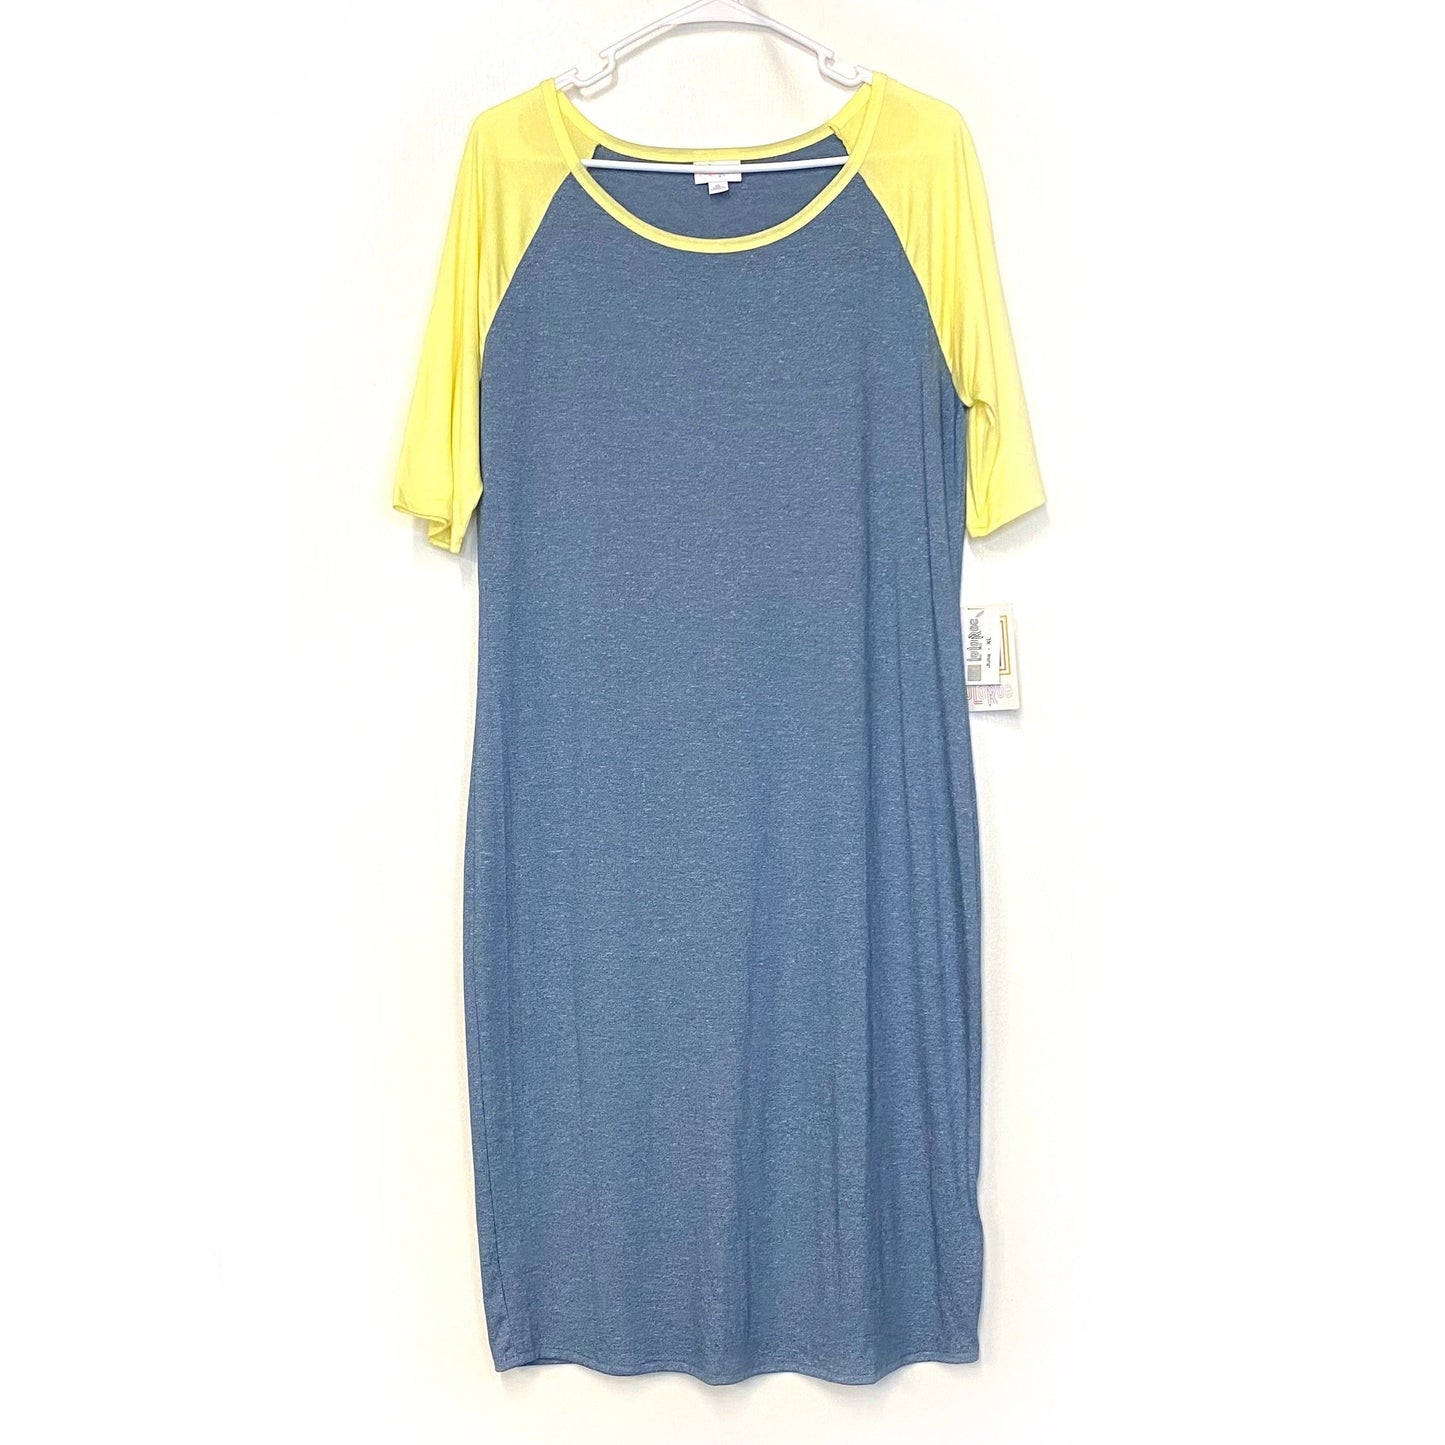 LuLaRoe Womens XL Yellow/Blue Julia Dress Scoop Neck ½ Sleeves NWT